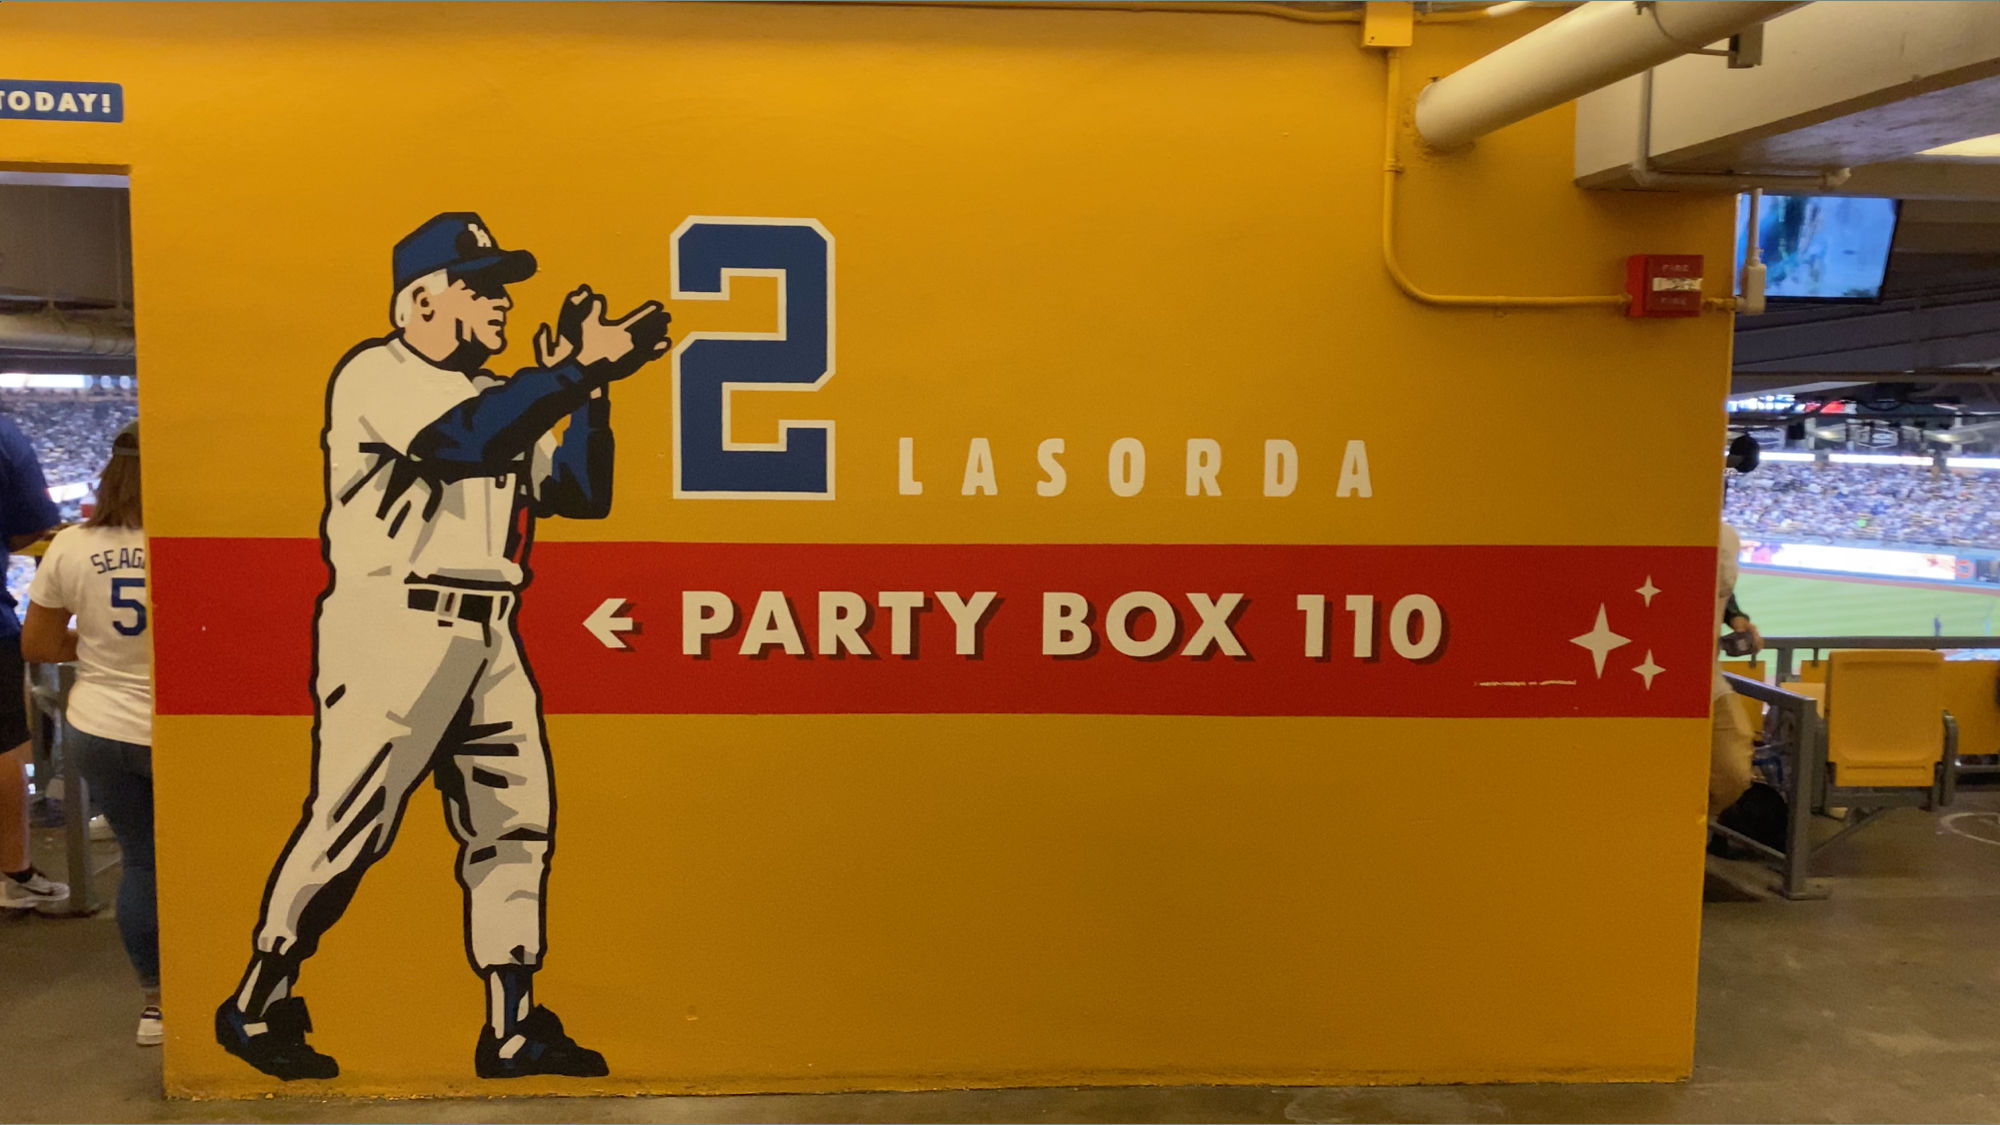 Tommy Lasorda Party Box 110